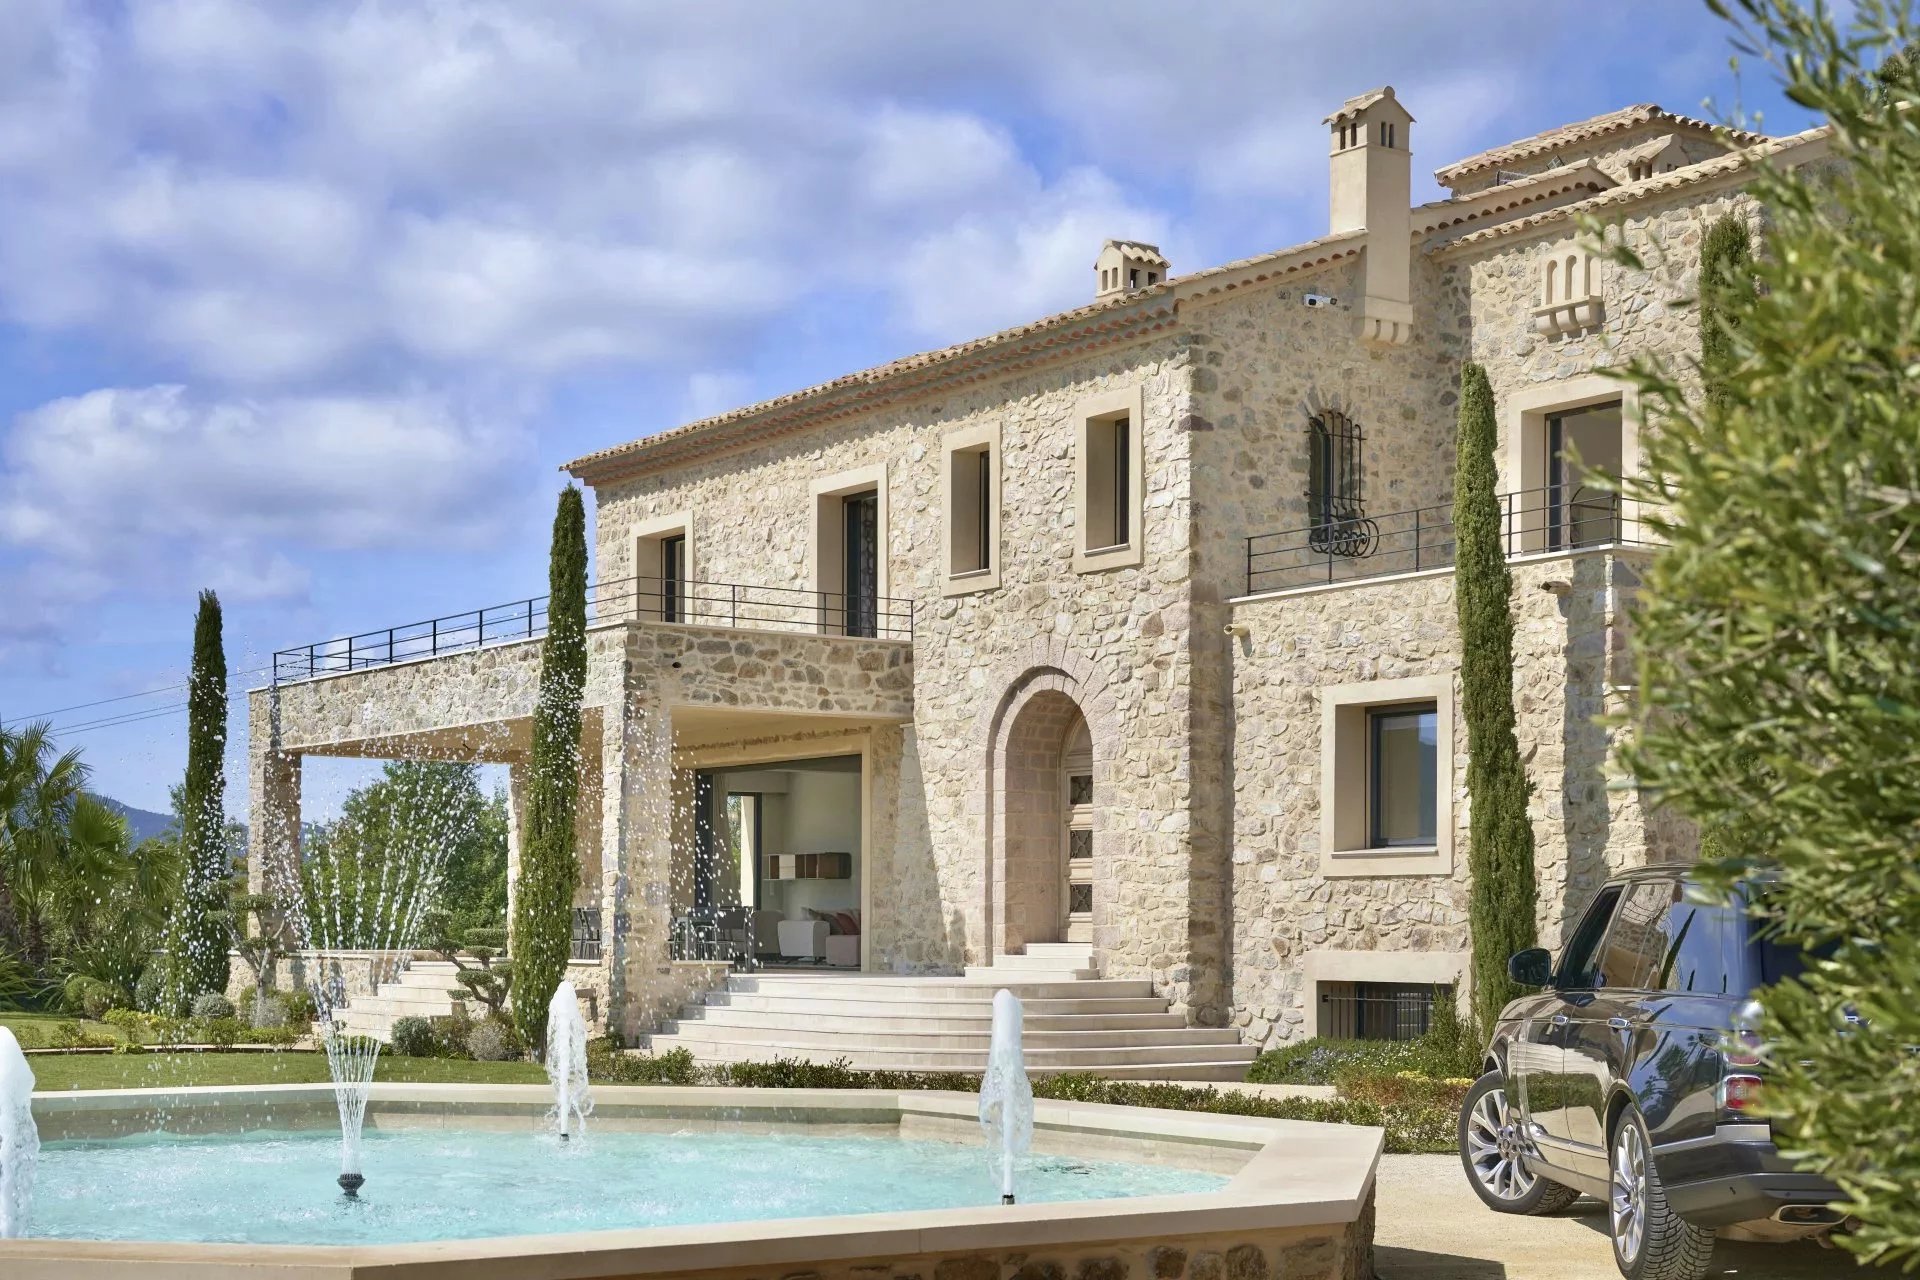 Francis York Luxury Villa Overlooking the Bay of Saint Tropez, French Riviera 1.jpg